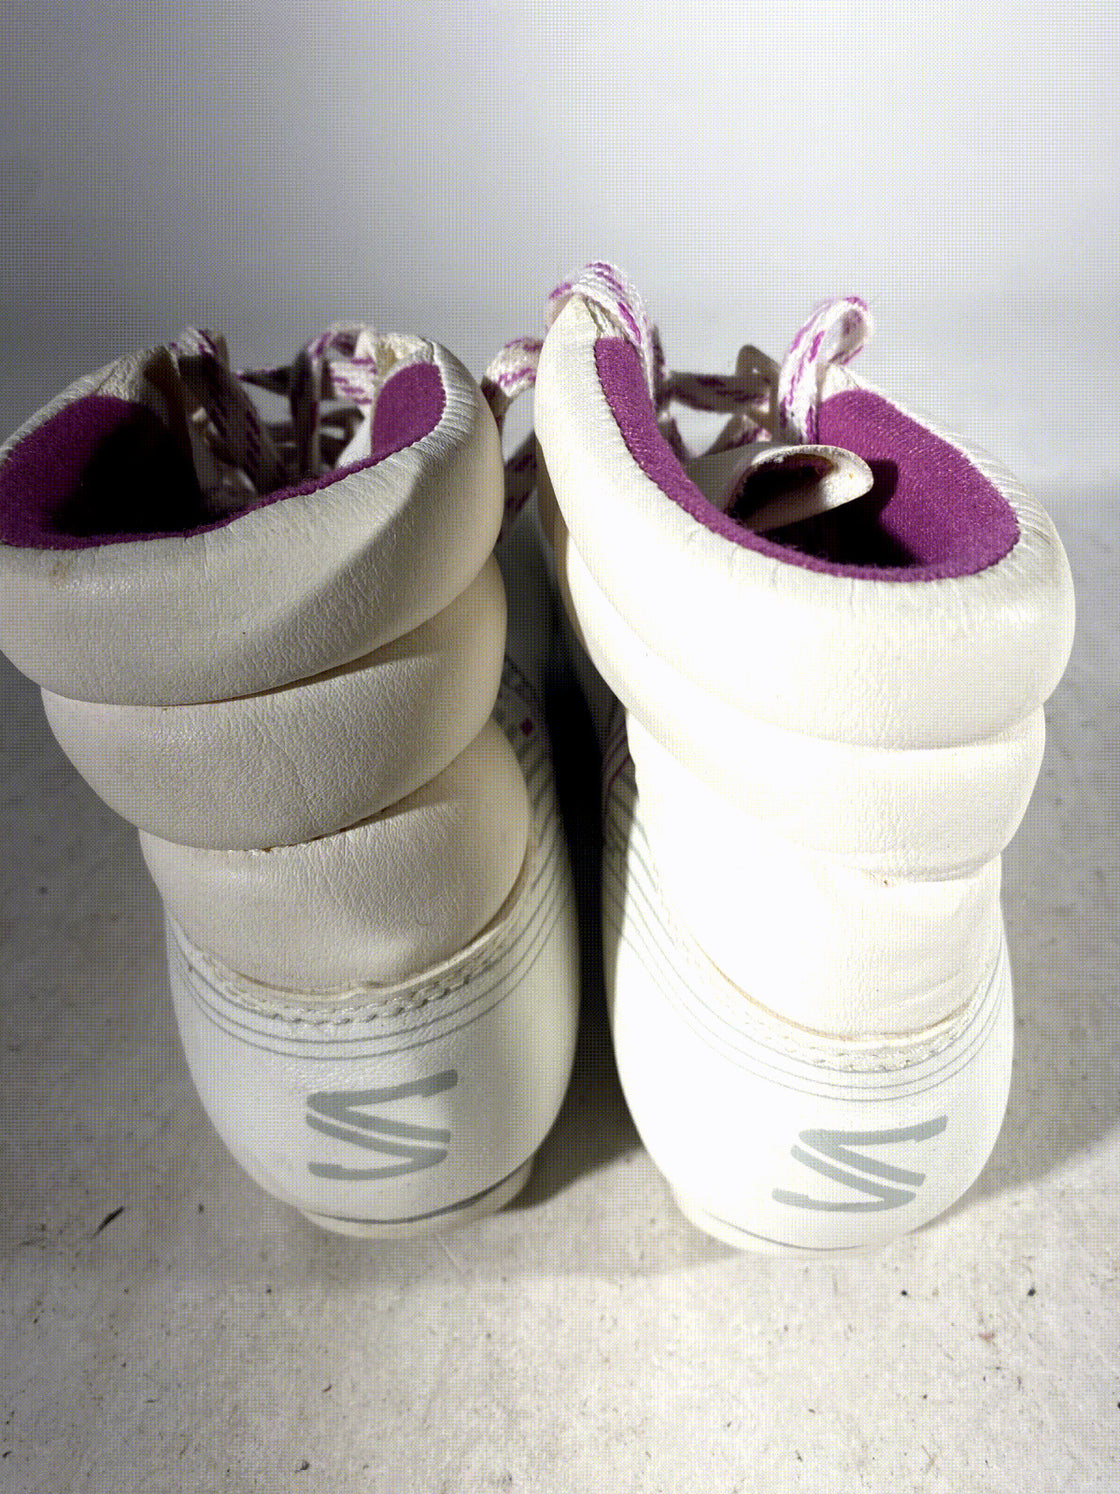 SALOMON Vintage Nordic Cross Country Ski Boots Size EU40 US7.5 SNS Old Bindings